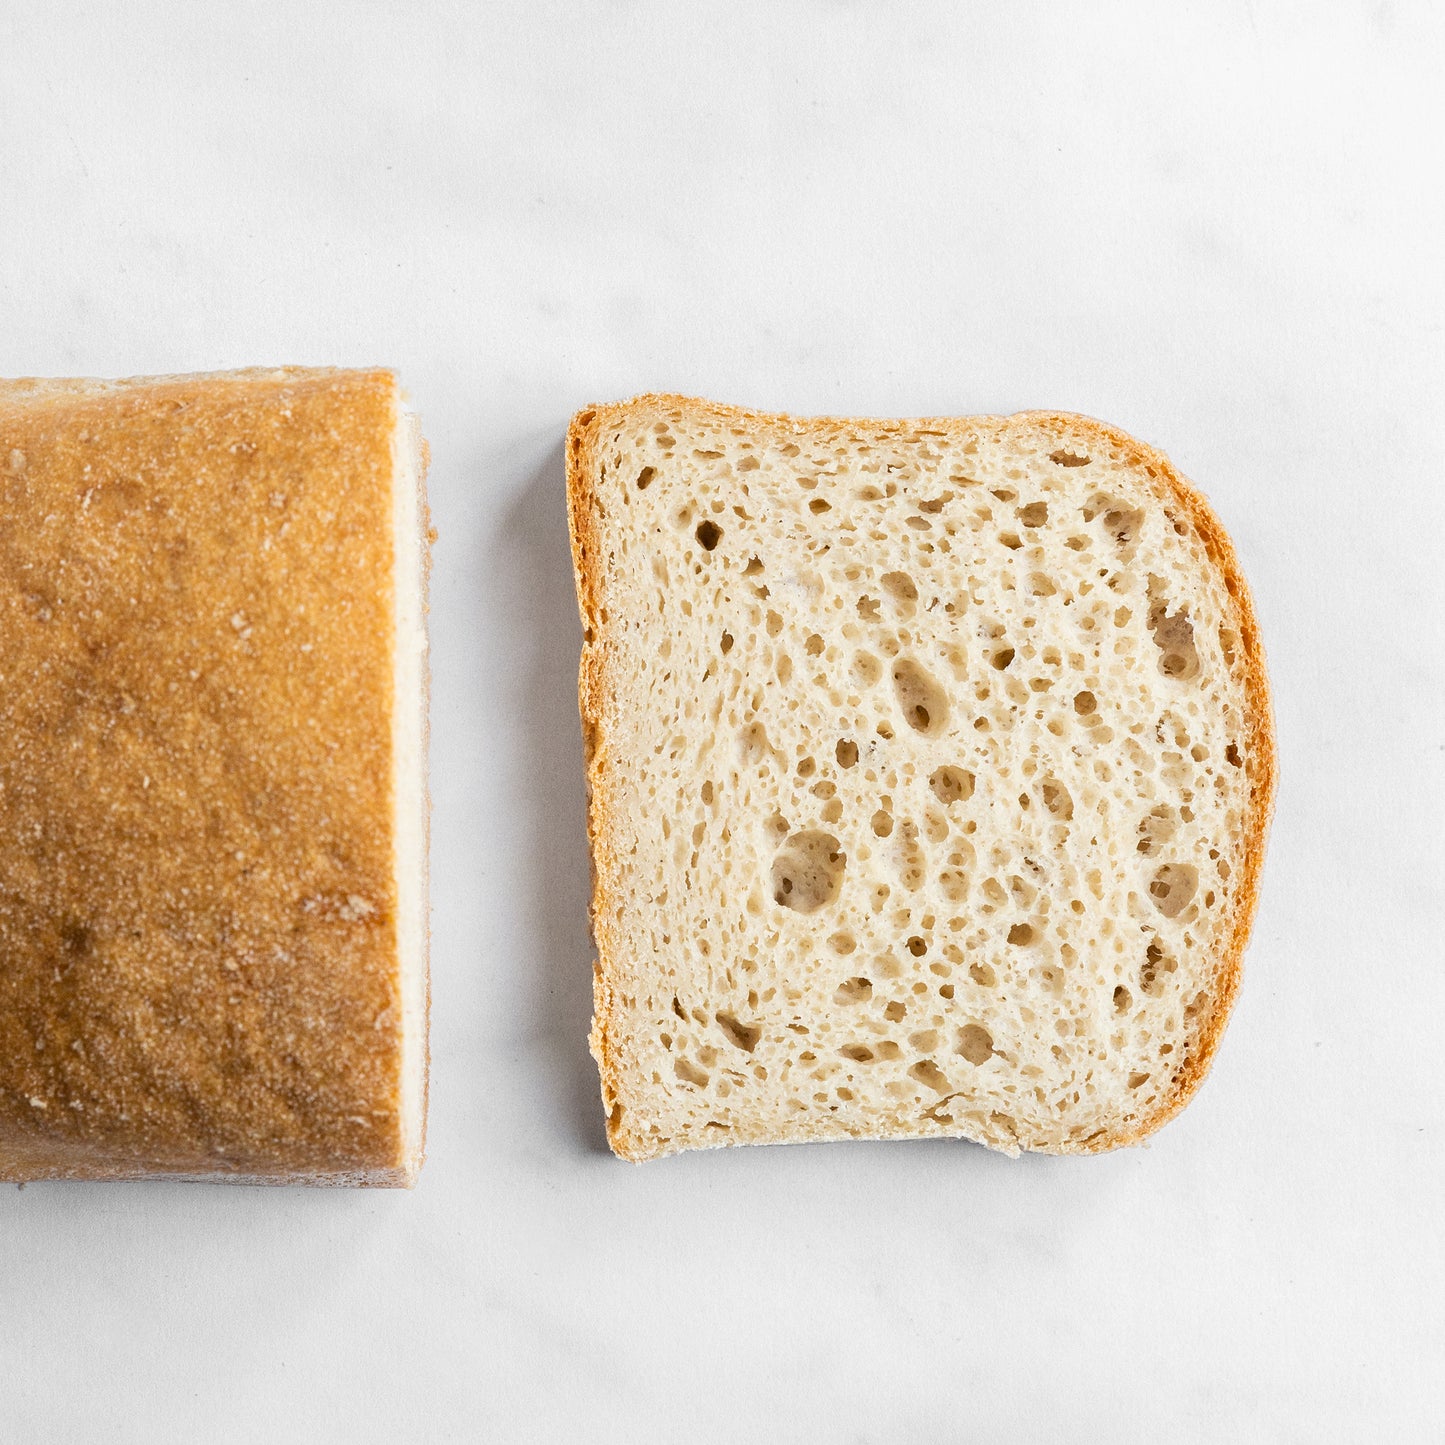 Yeast bread toast